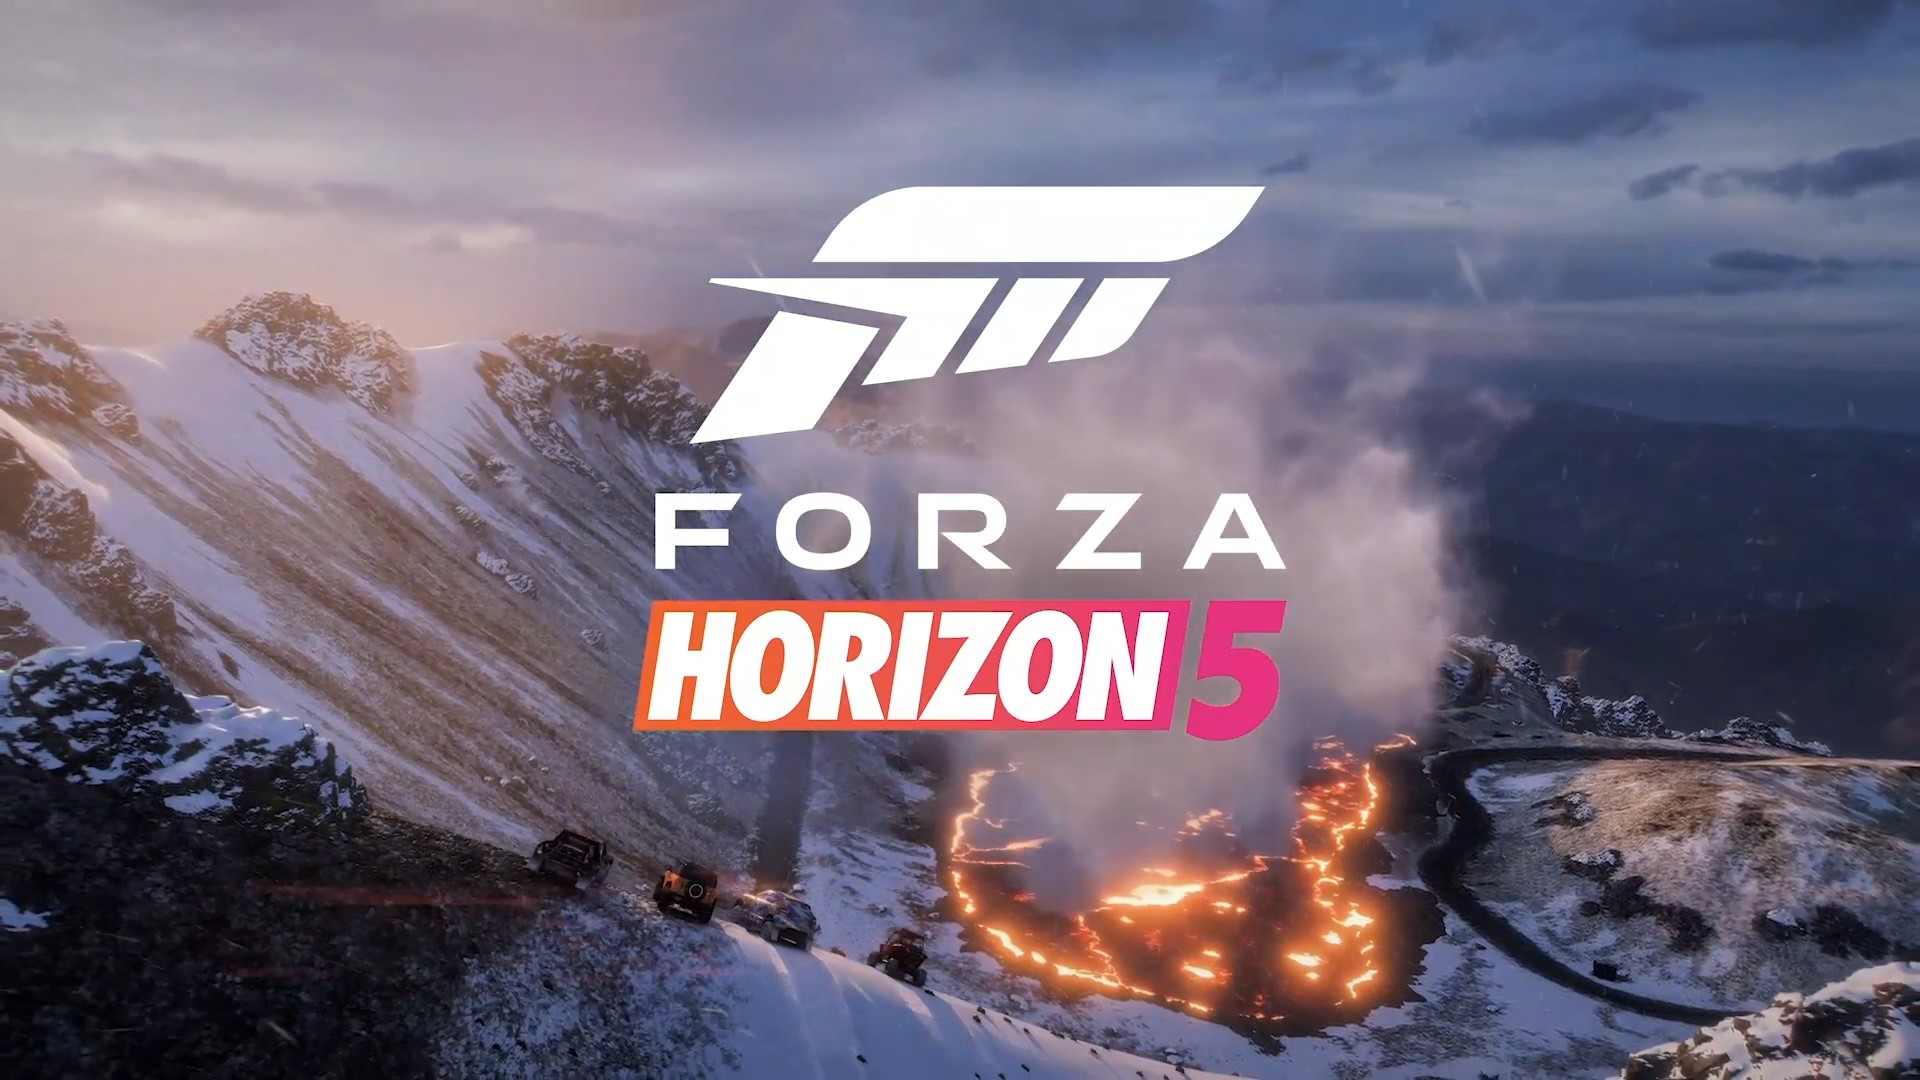 Forza Horizon 3 Análise - Gamereactor